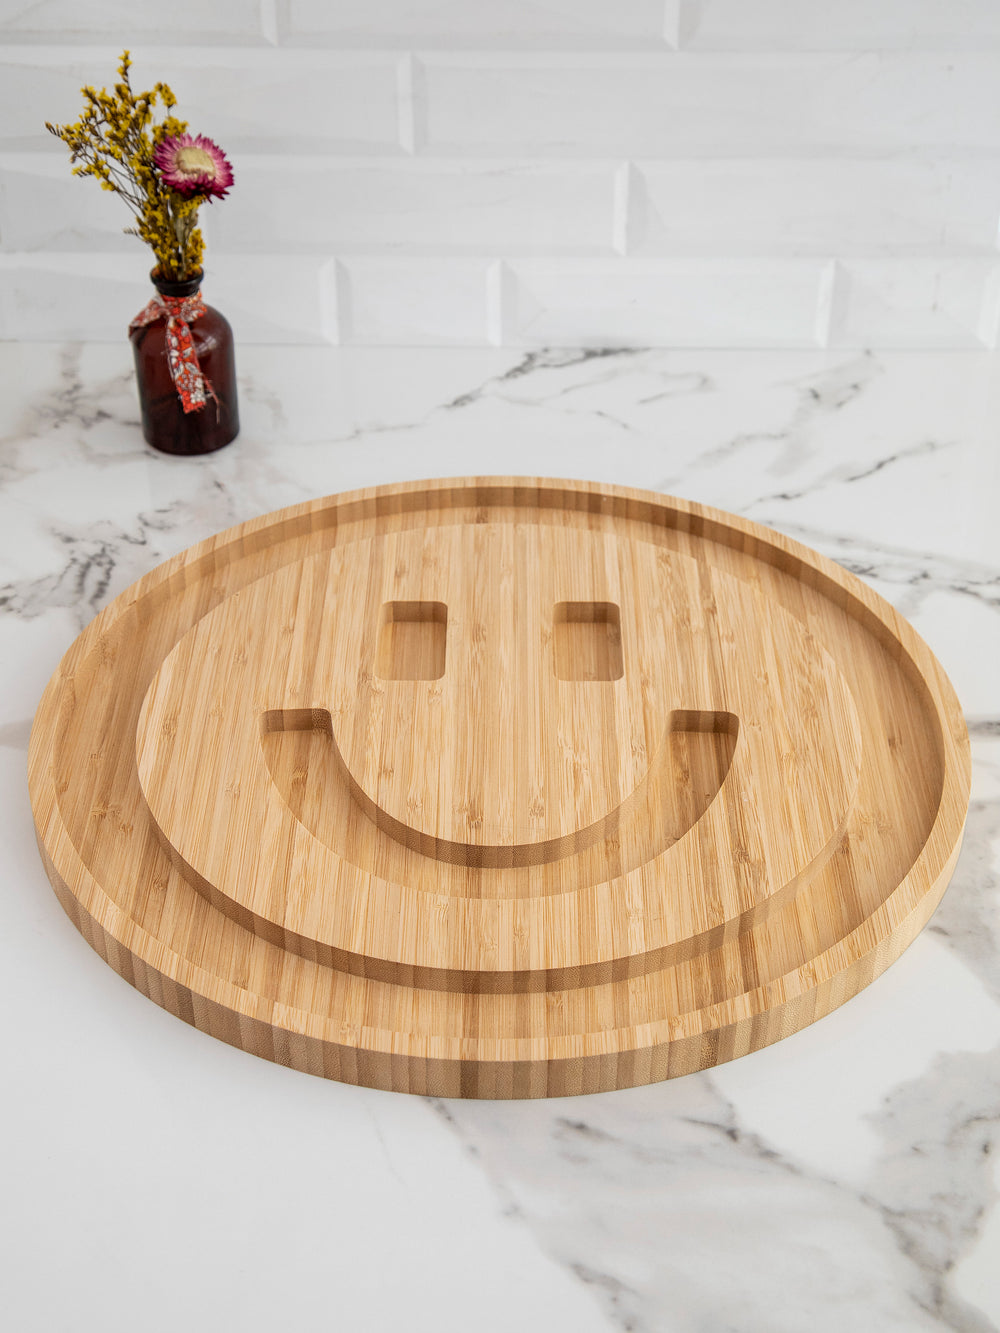  SMIRLY Bamboo Cutting Board Set - Wood Cutting Board